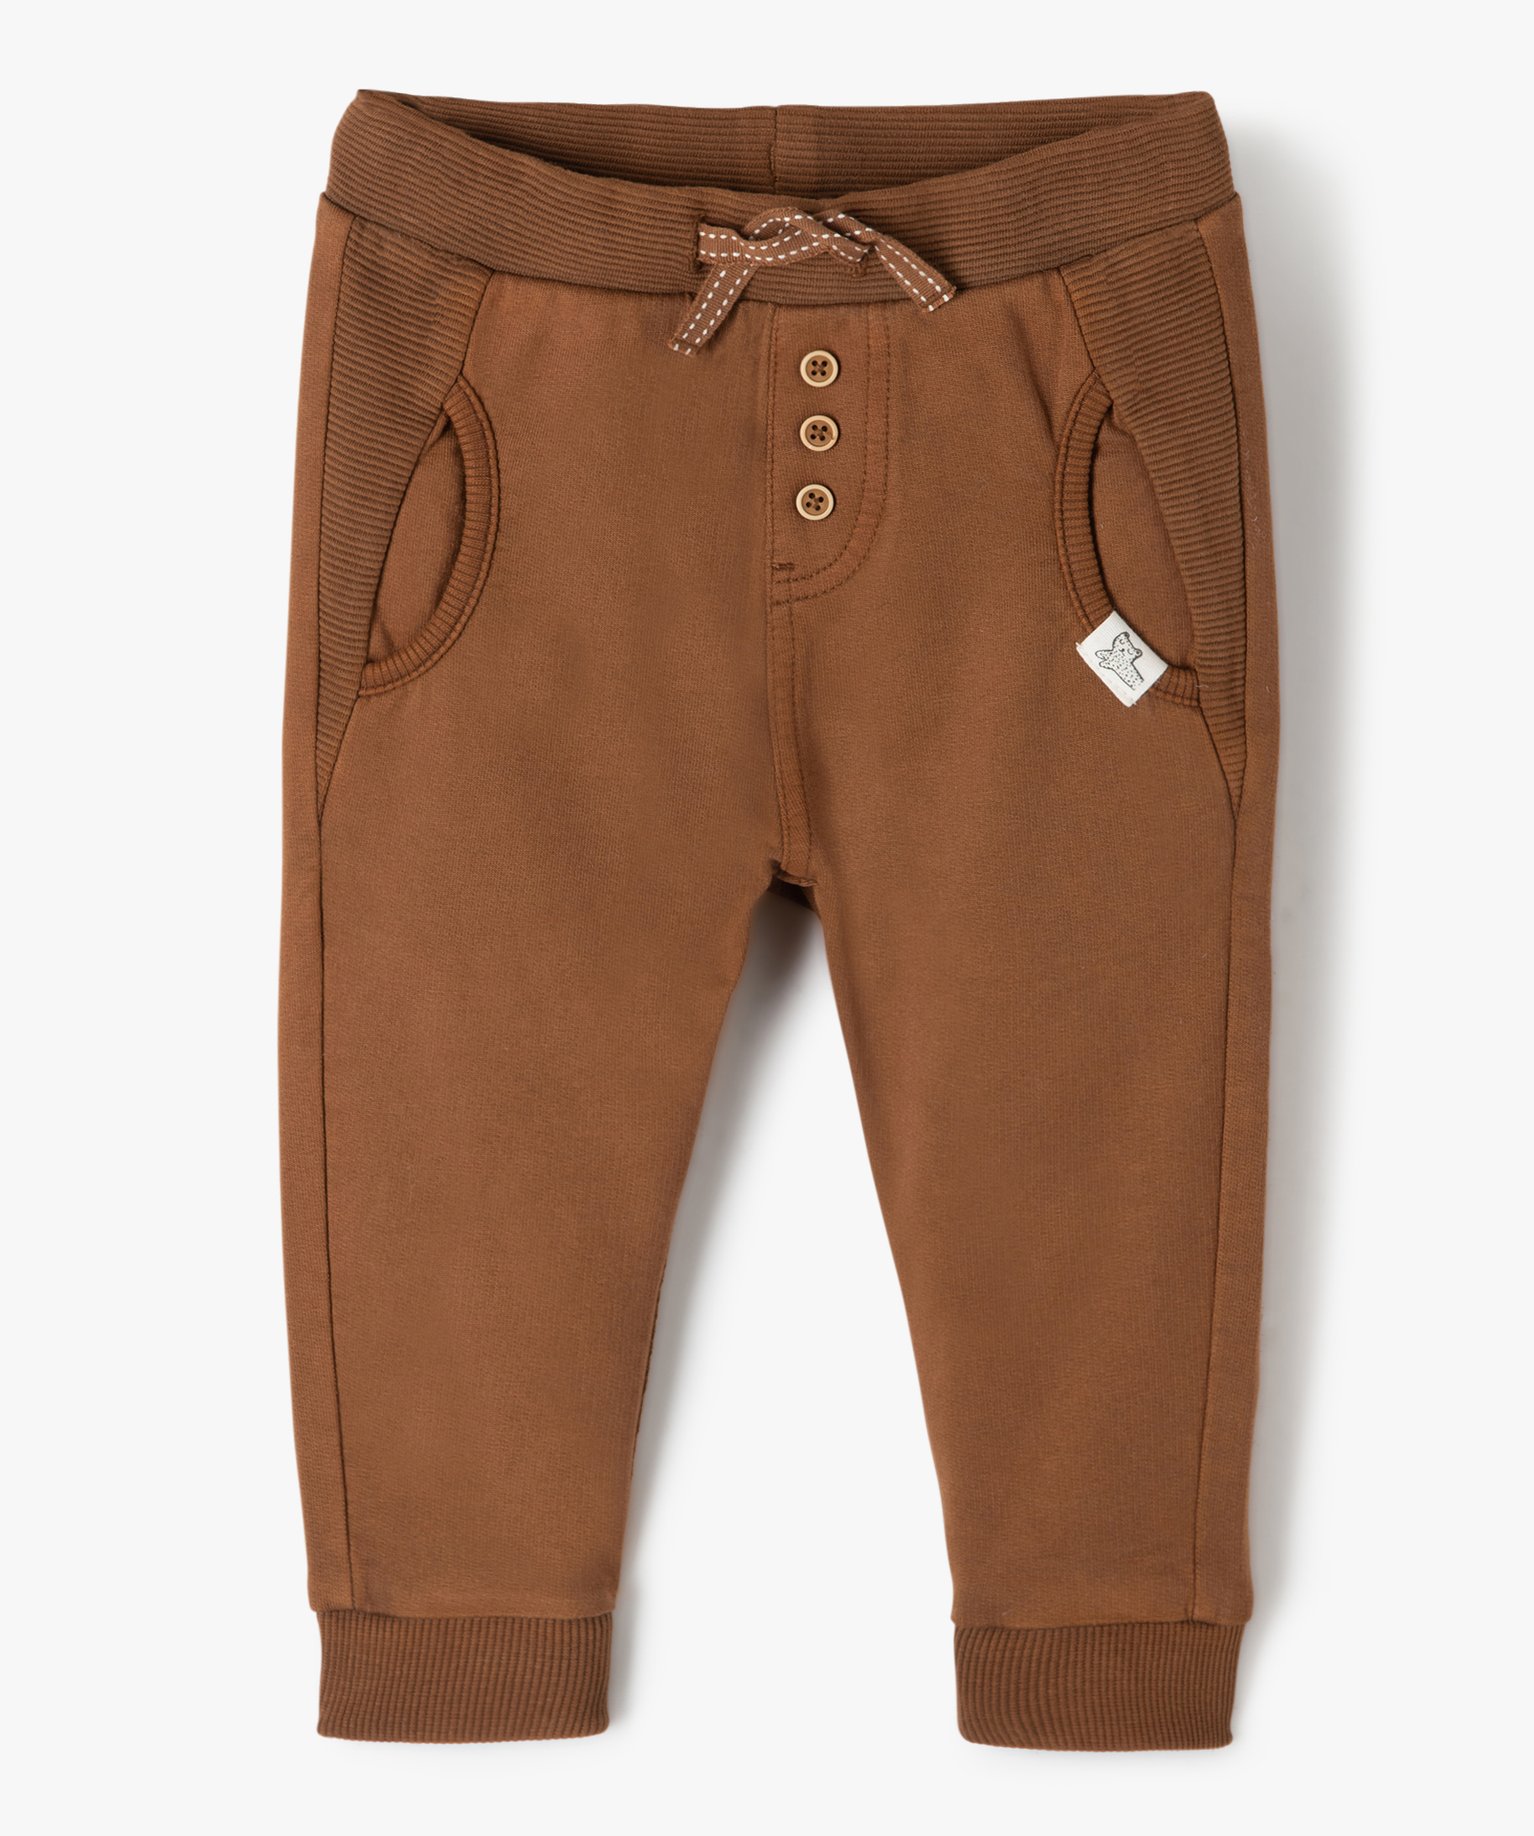 pantalon bebe en sweat avec jeu de textures brun